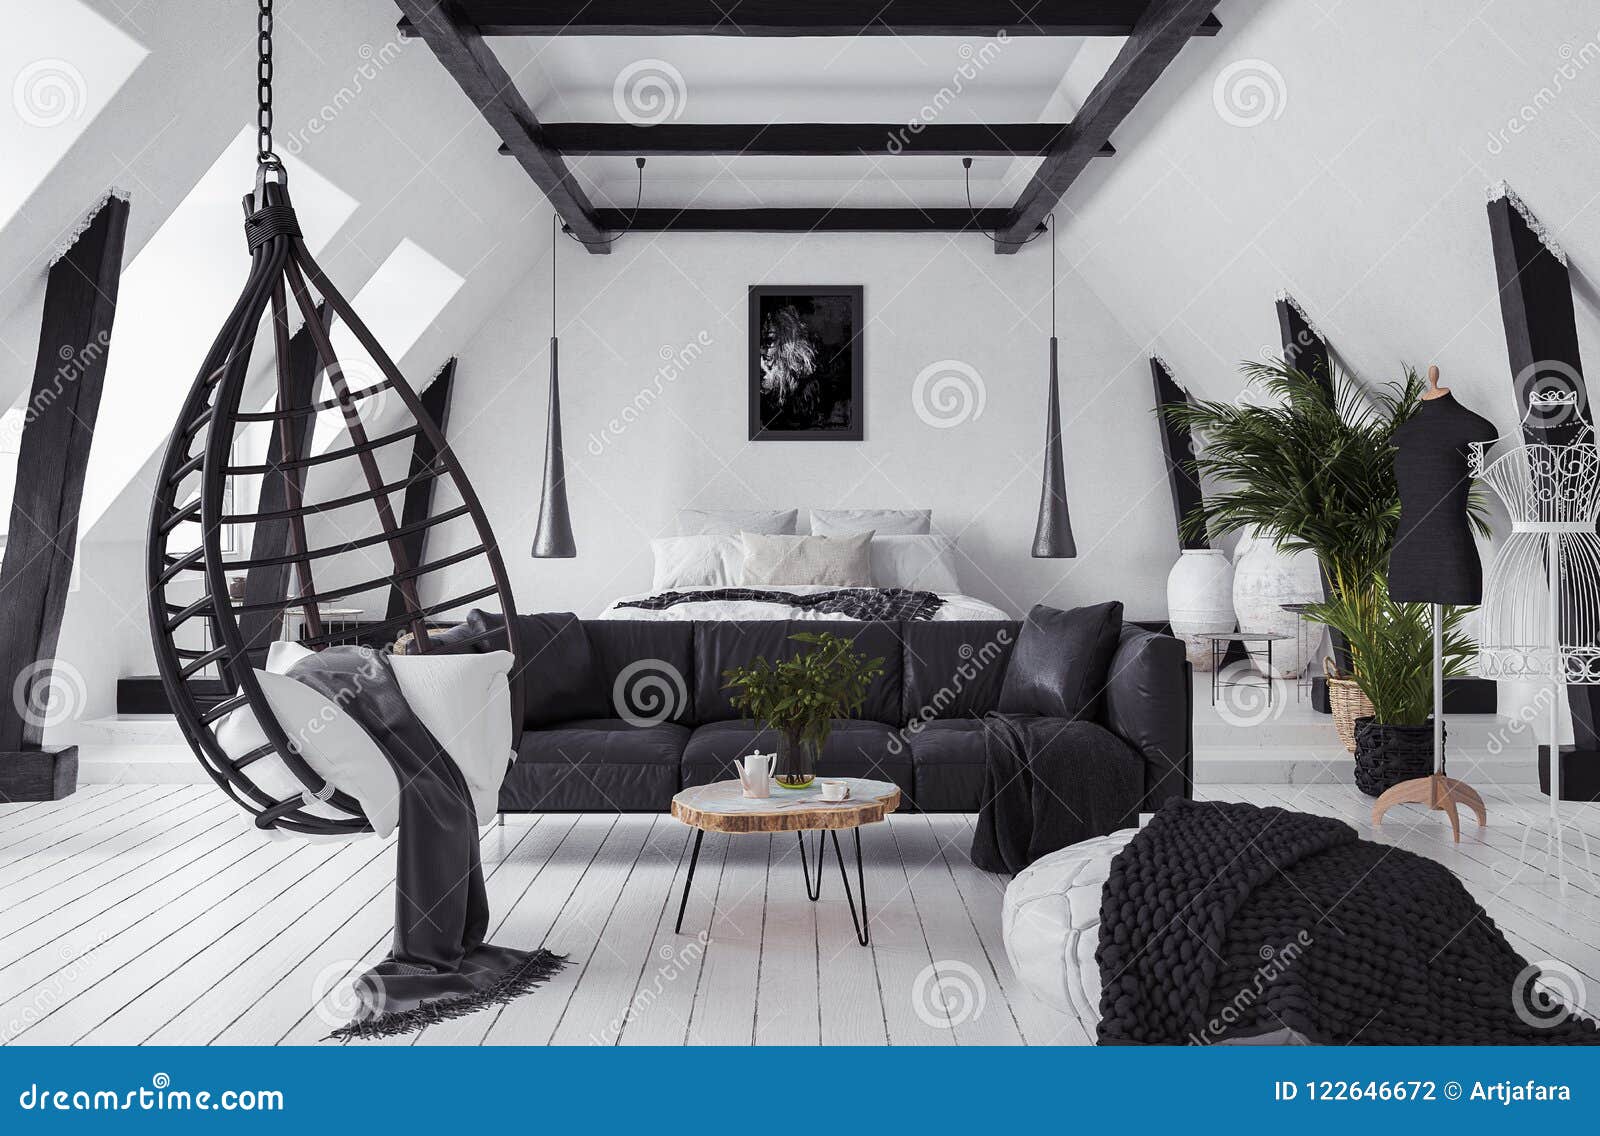 modern open-plan apartment in attic, loft style